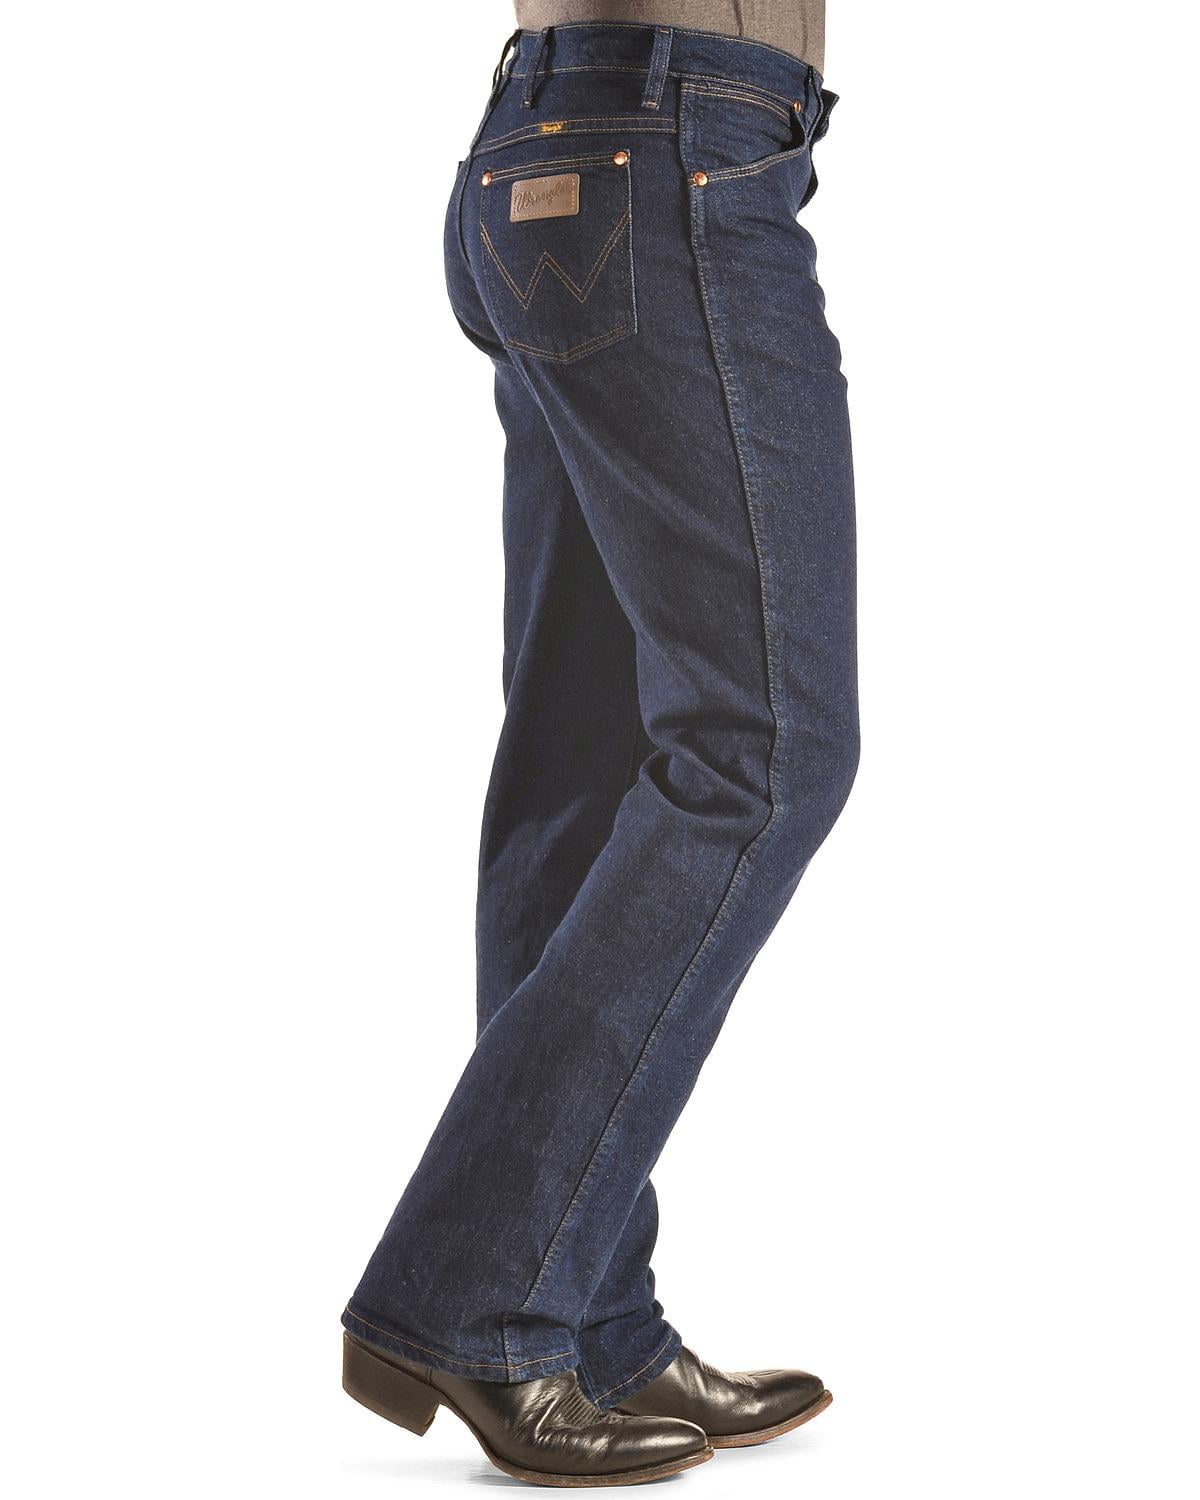 bootleg jeans target